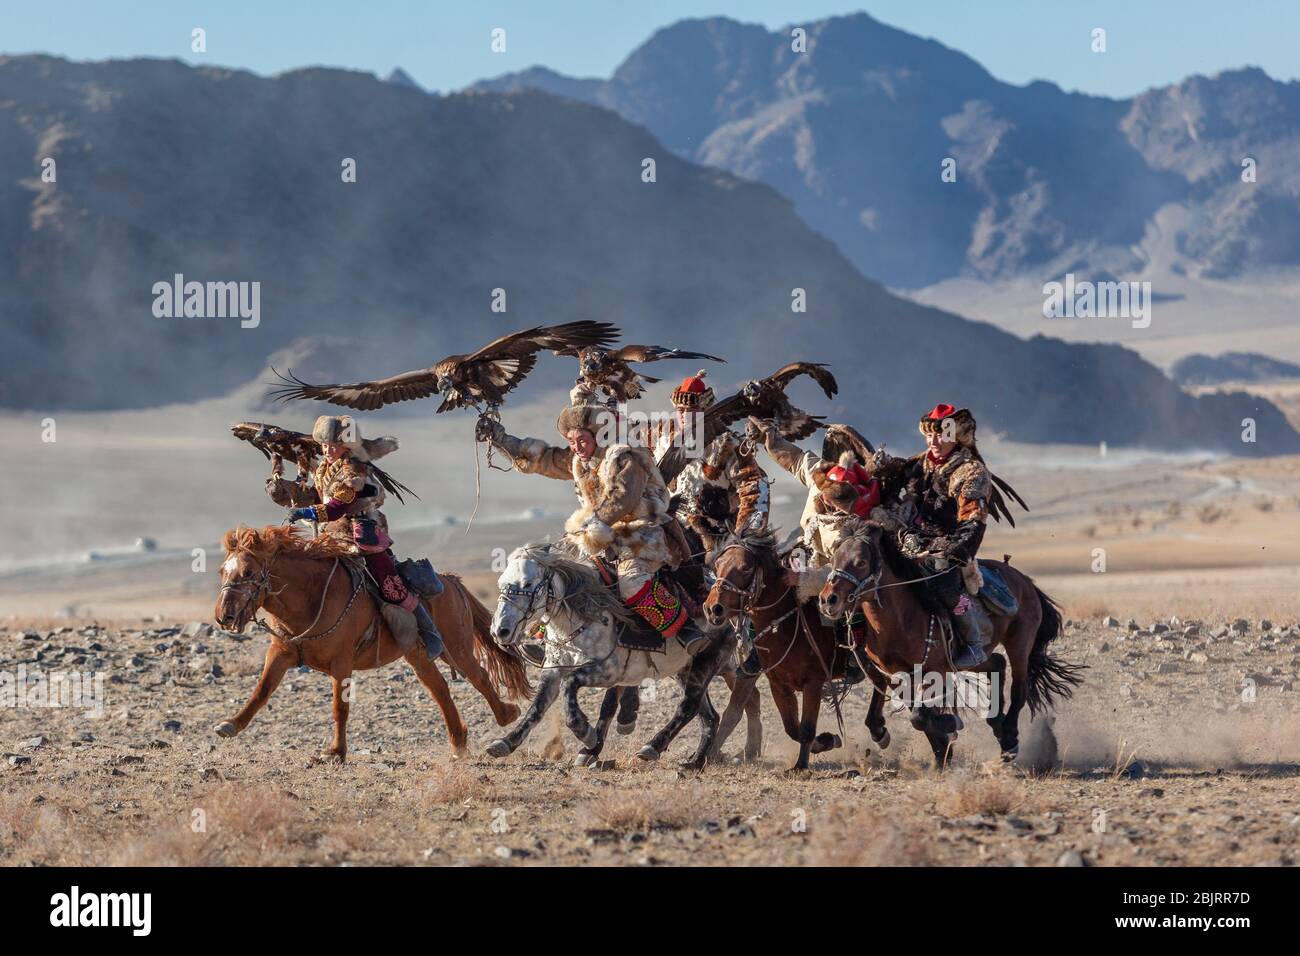 Ulgii, Mongolia : Golden eagle festival traditional Kazakh nomad games Stock Photo